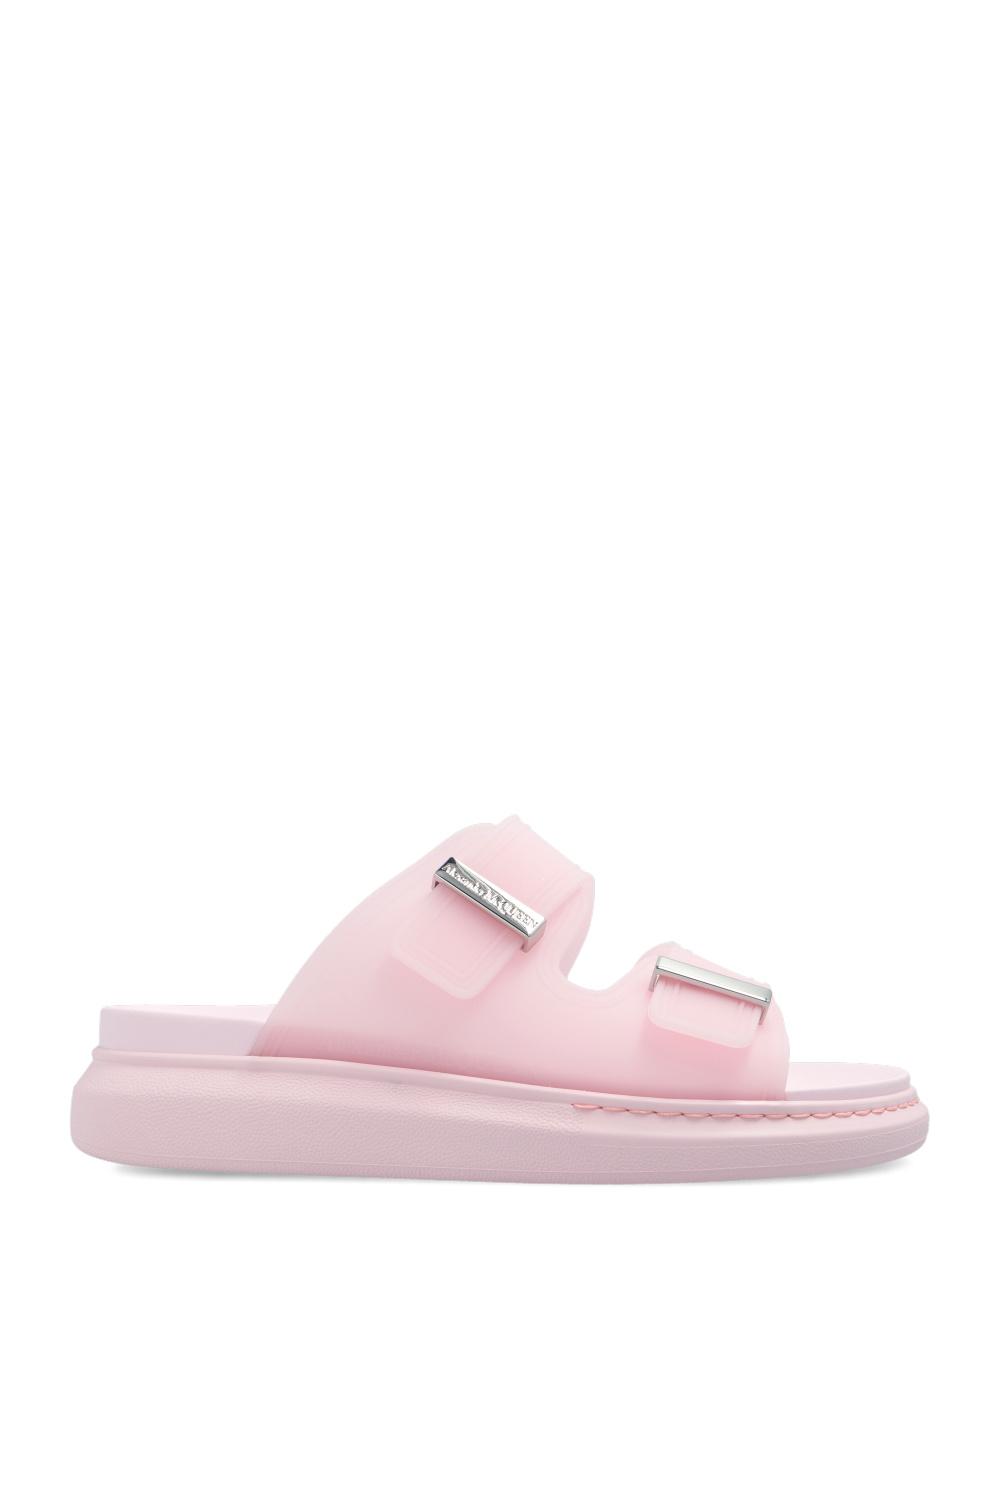 Alexander McQueen Rubber Slides in Pink | Lyst